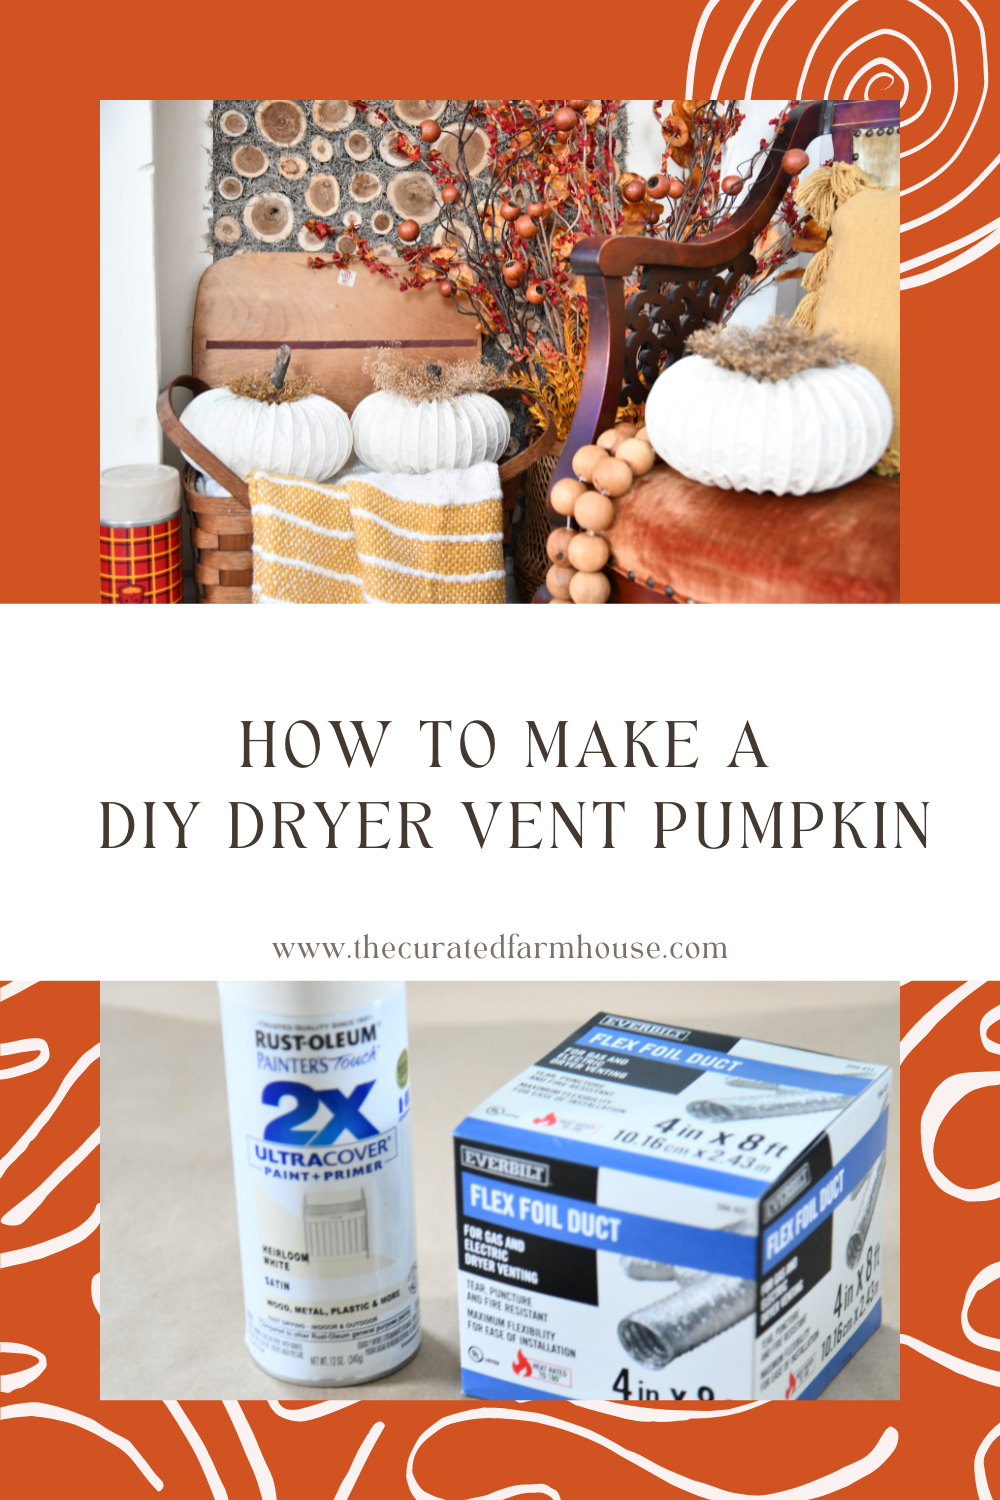 How to Make a DIY Dryer Vent Pumpkin